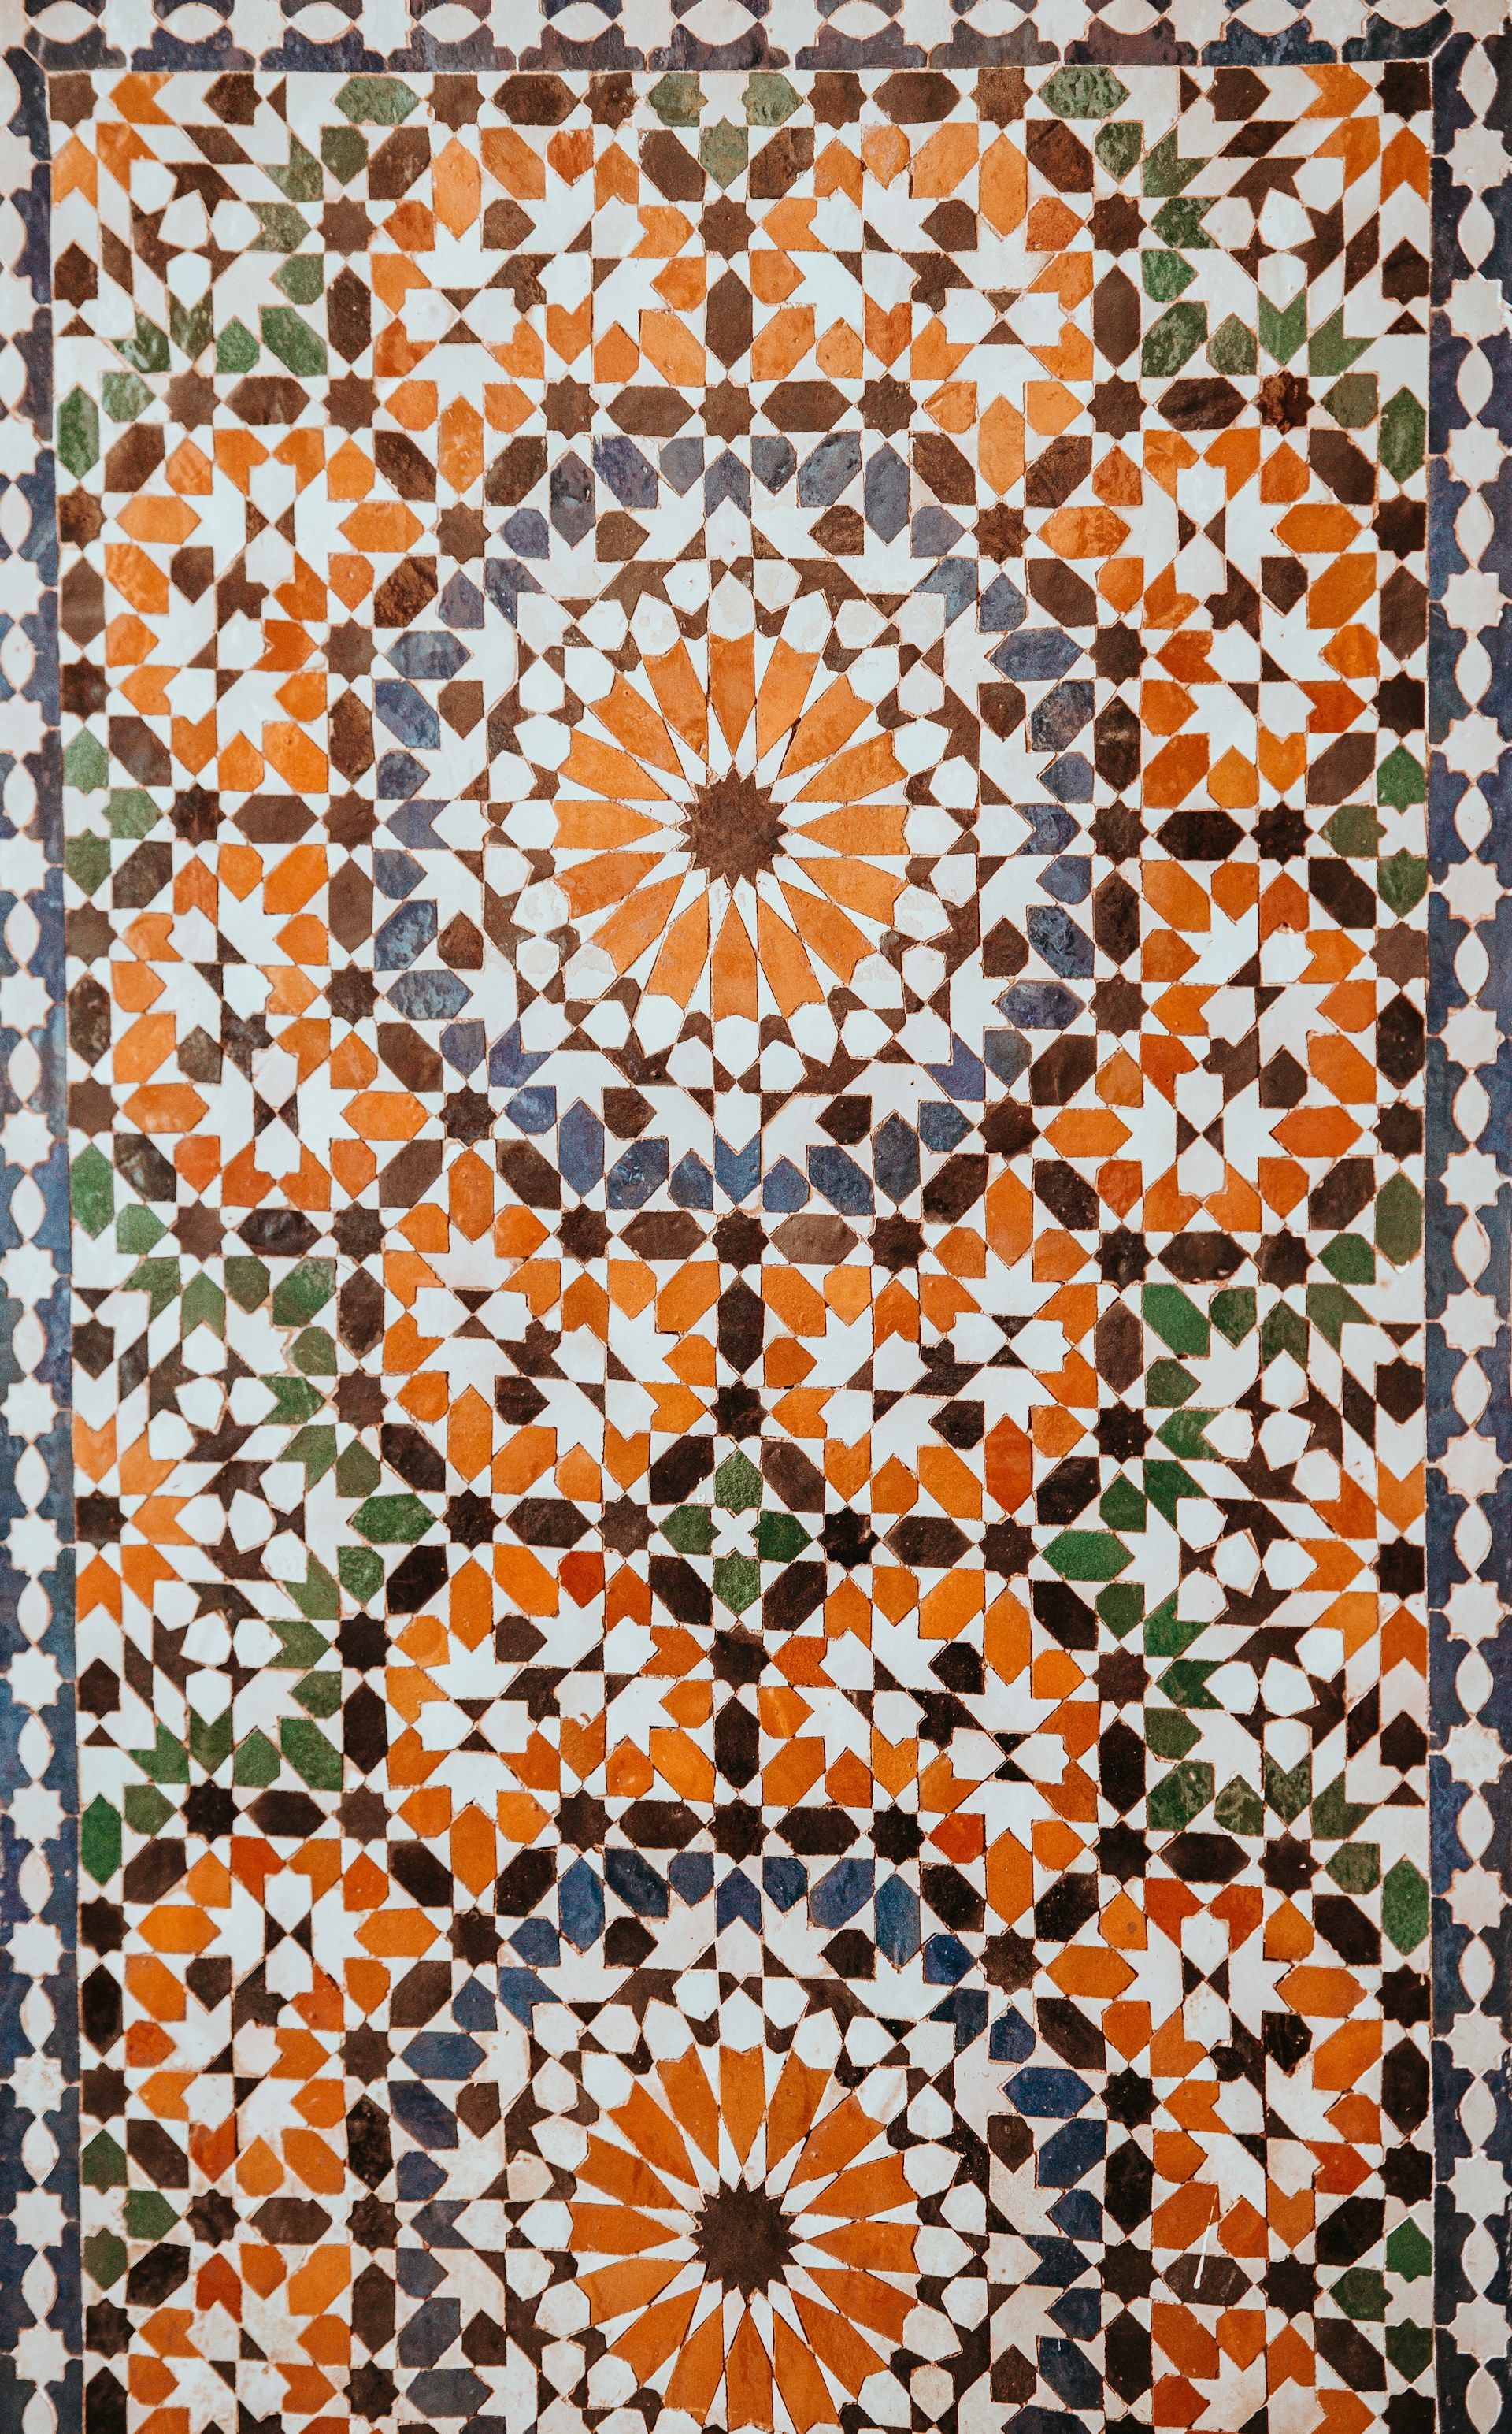 A photograph of an ornate tile mosaic.